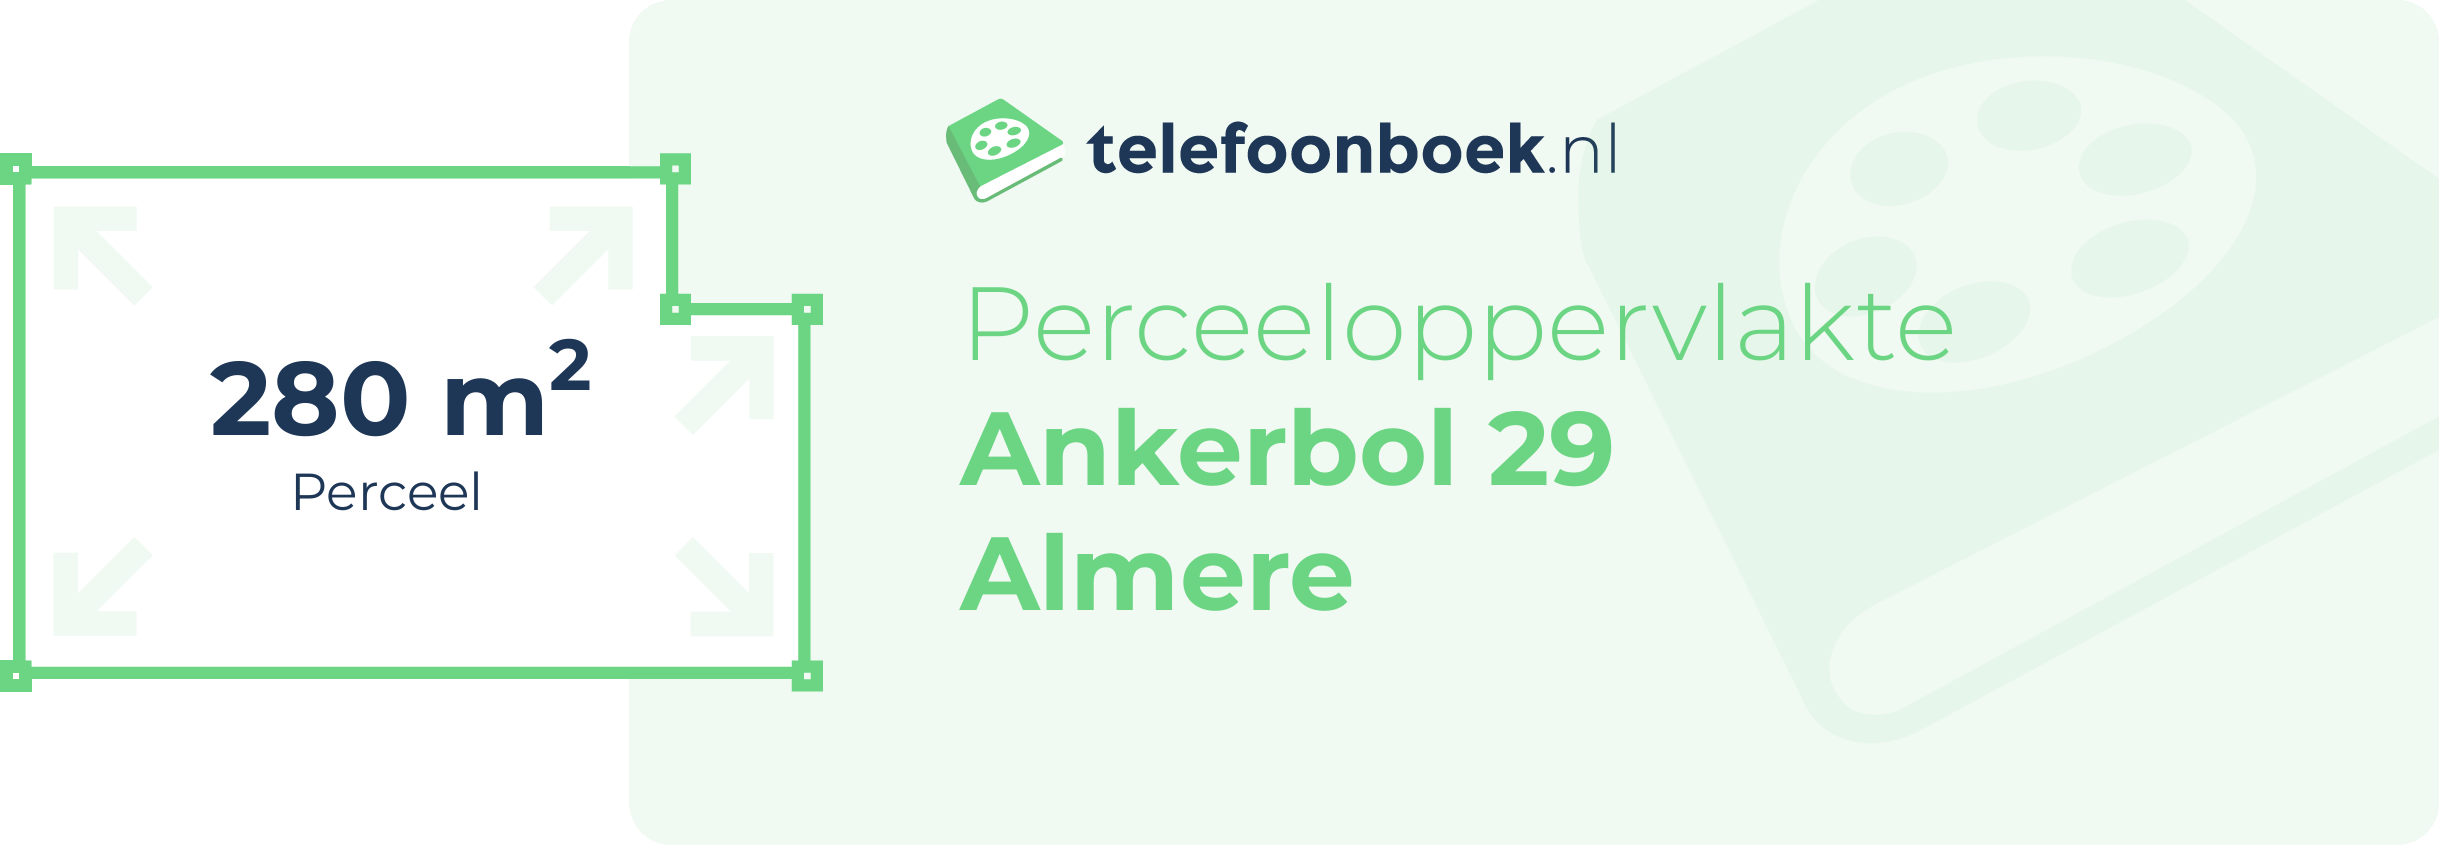 Perceeloppervlakte Ankerbol 29 Almere